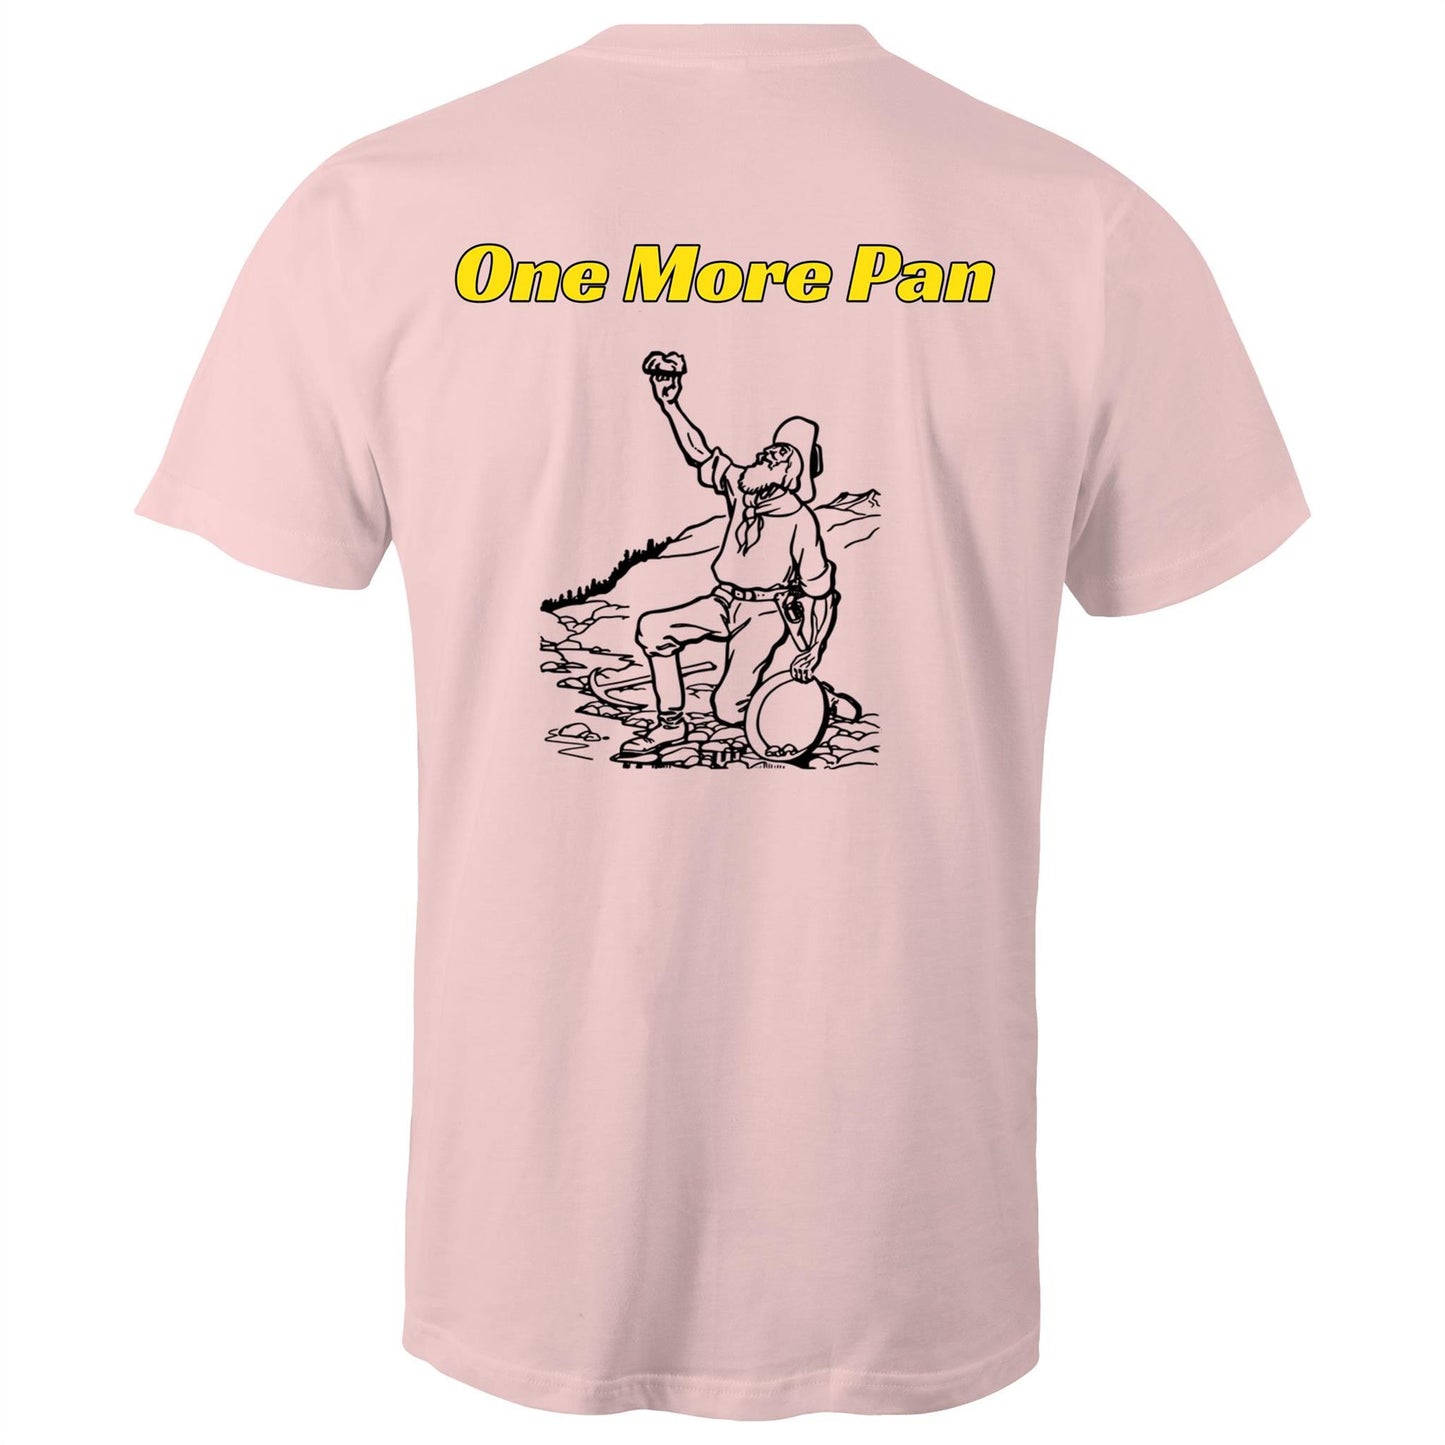 One More Pan T-Shirt